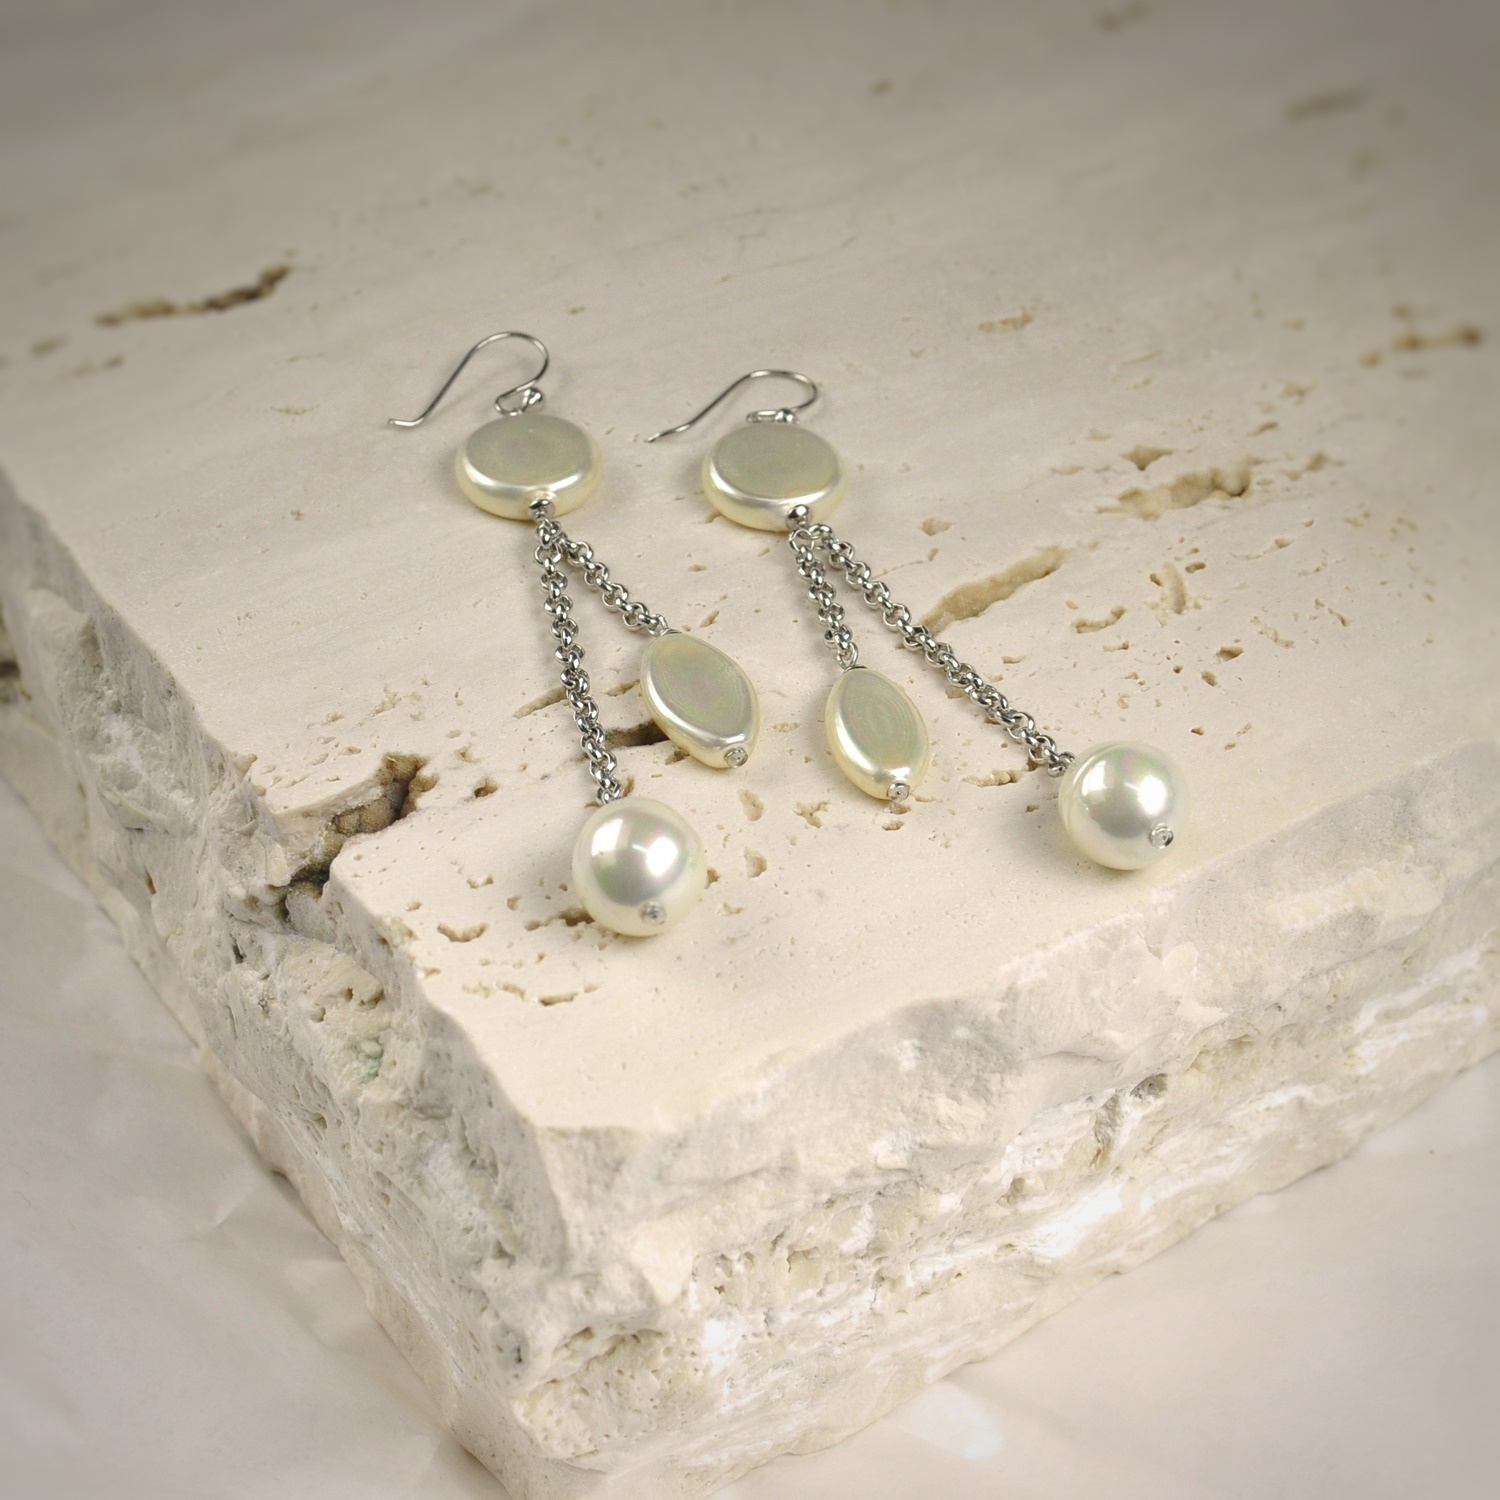 Long silver earrings with original pearls 4